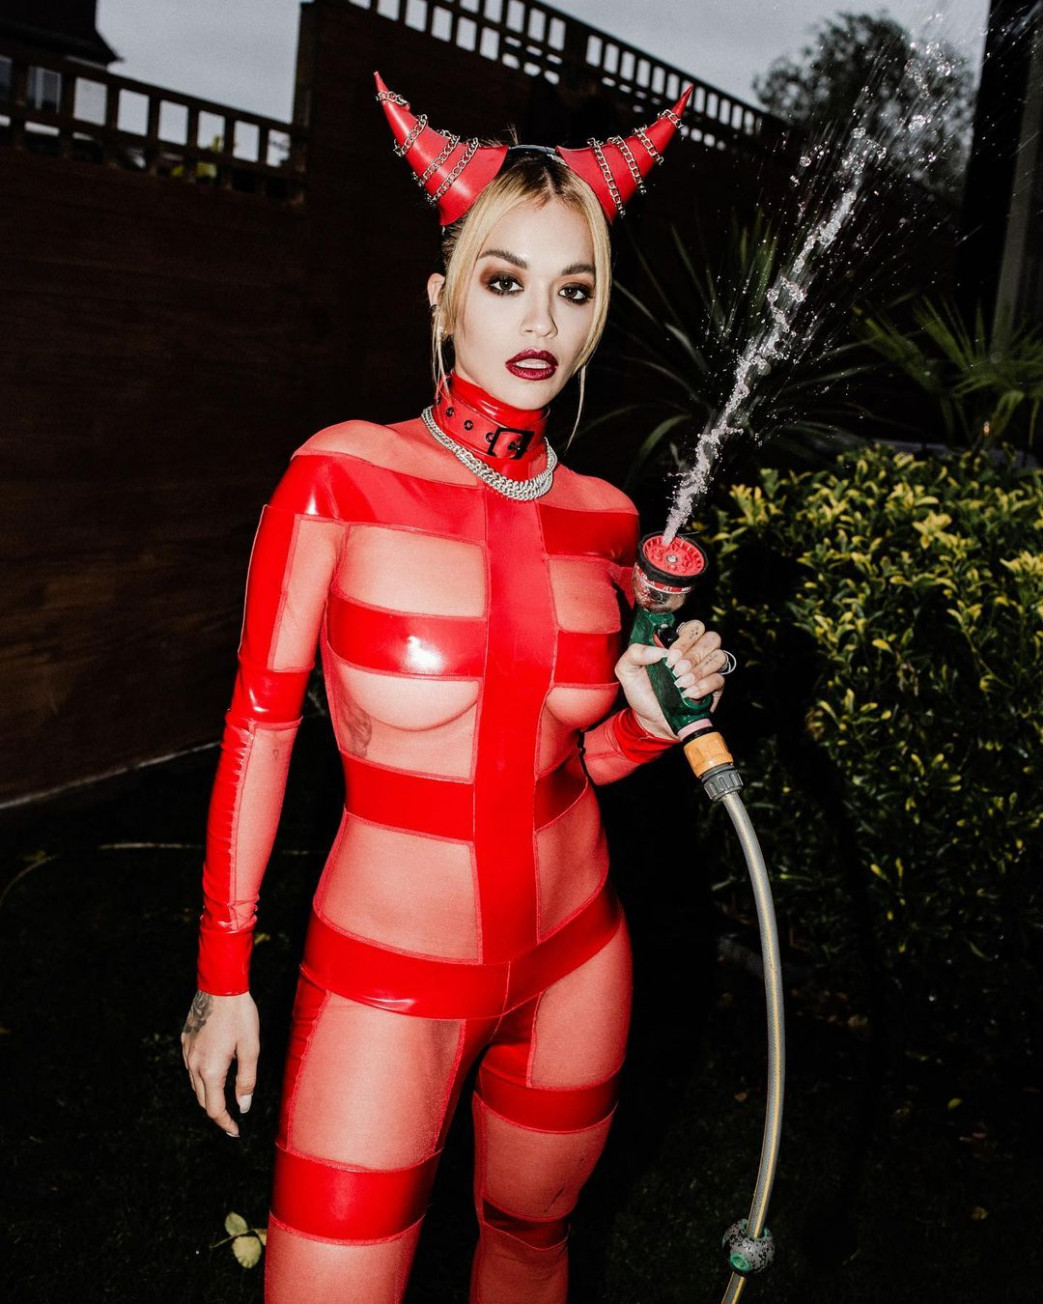 Rita-Ora-In-See-Thru-Devil-Costume-For-Halloween-2020-3.jpg